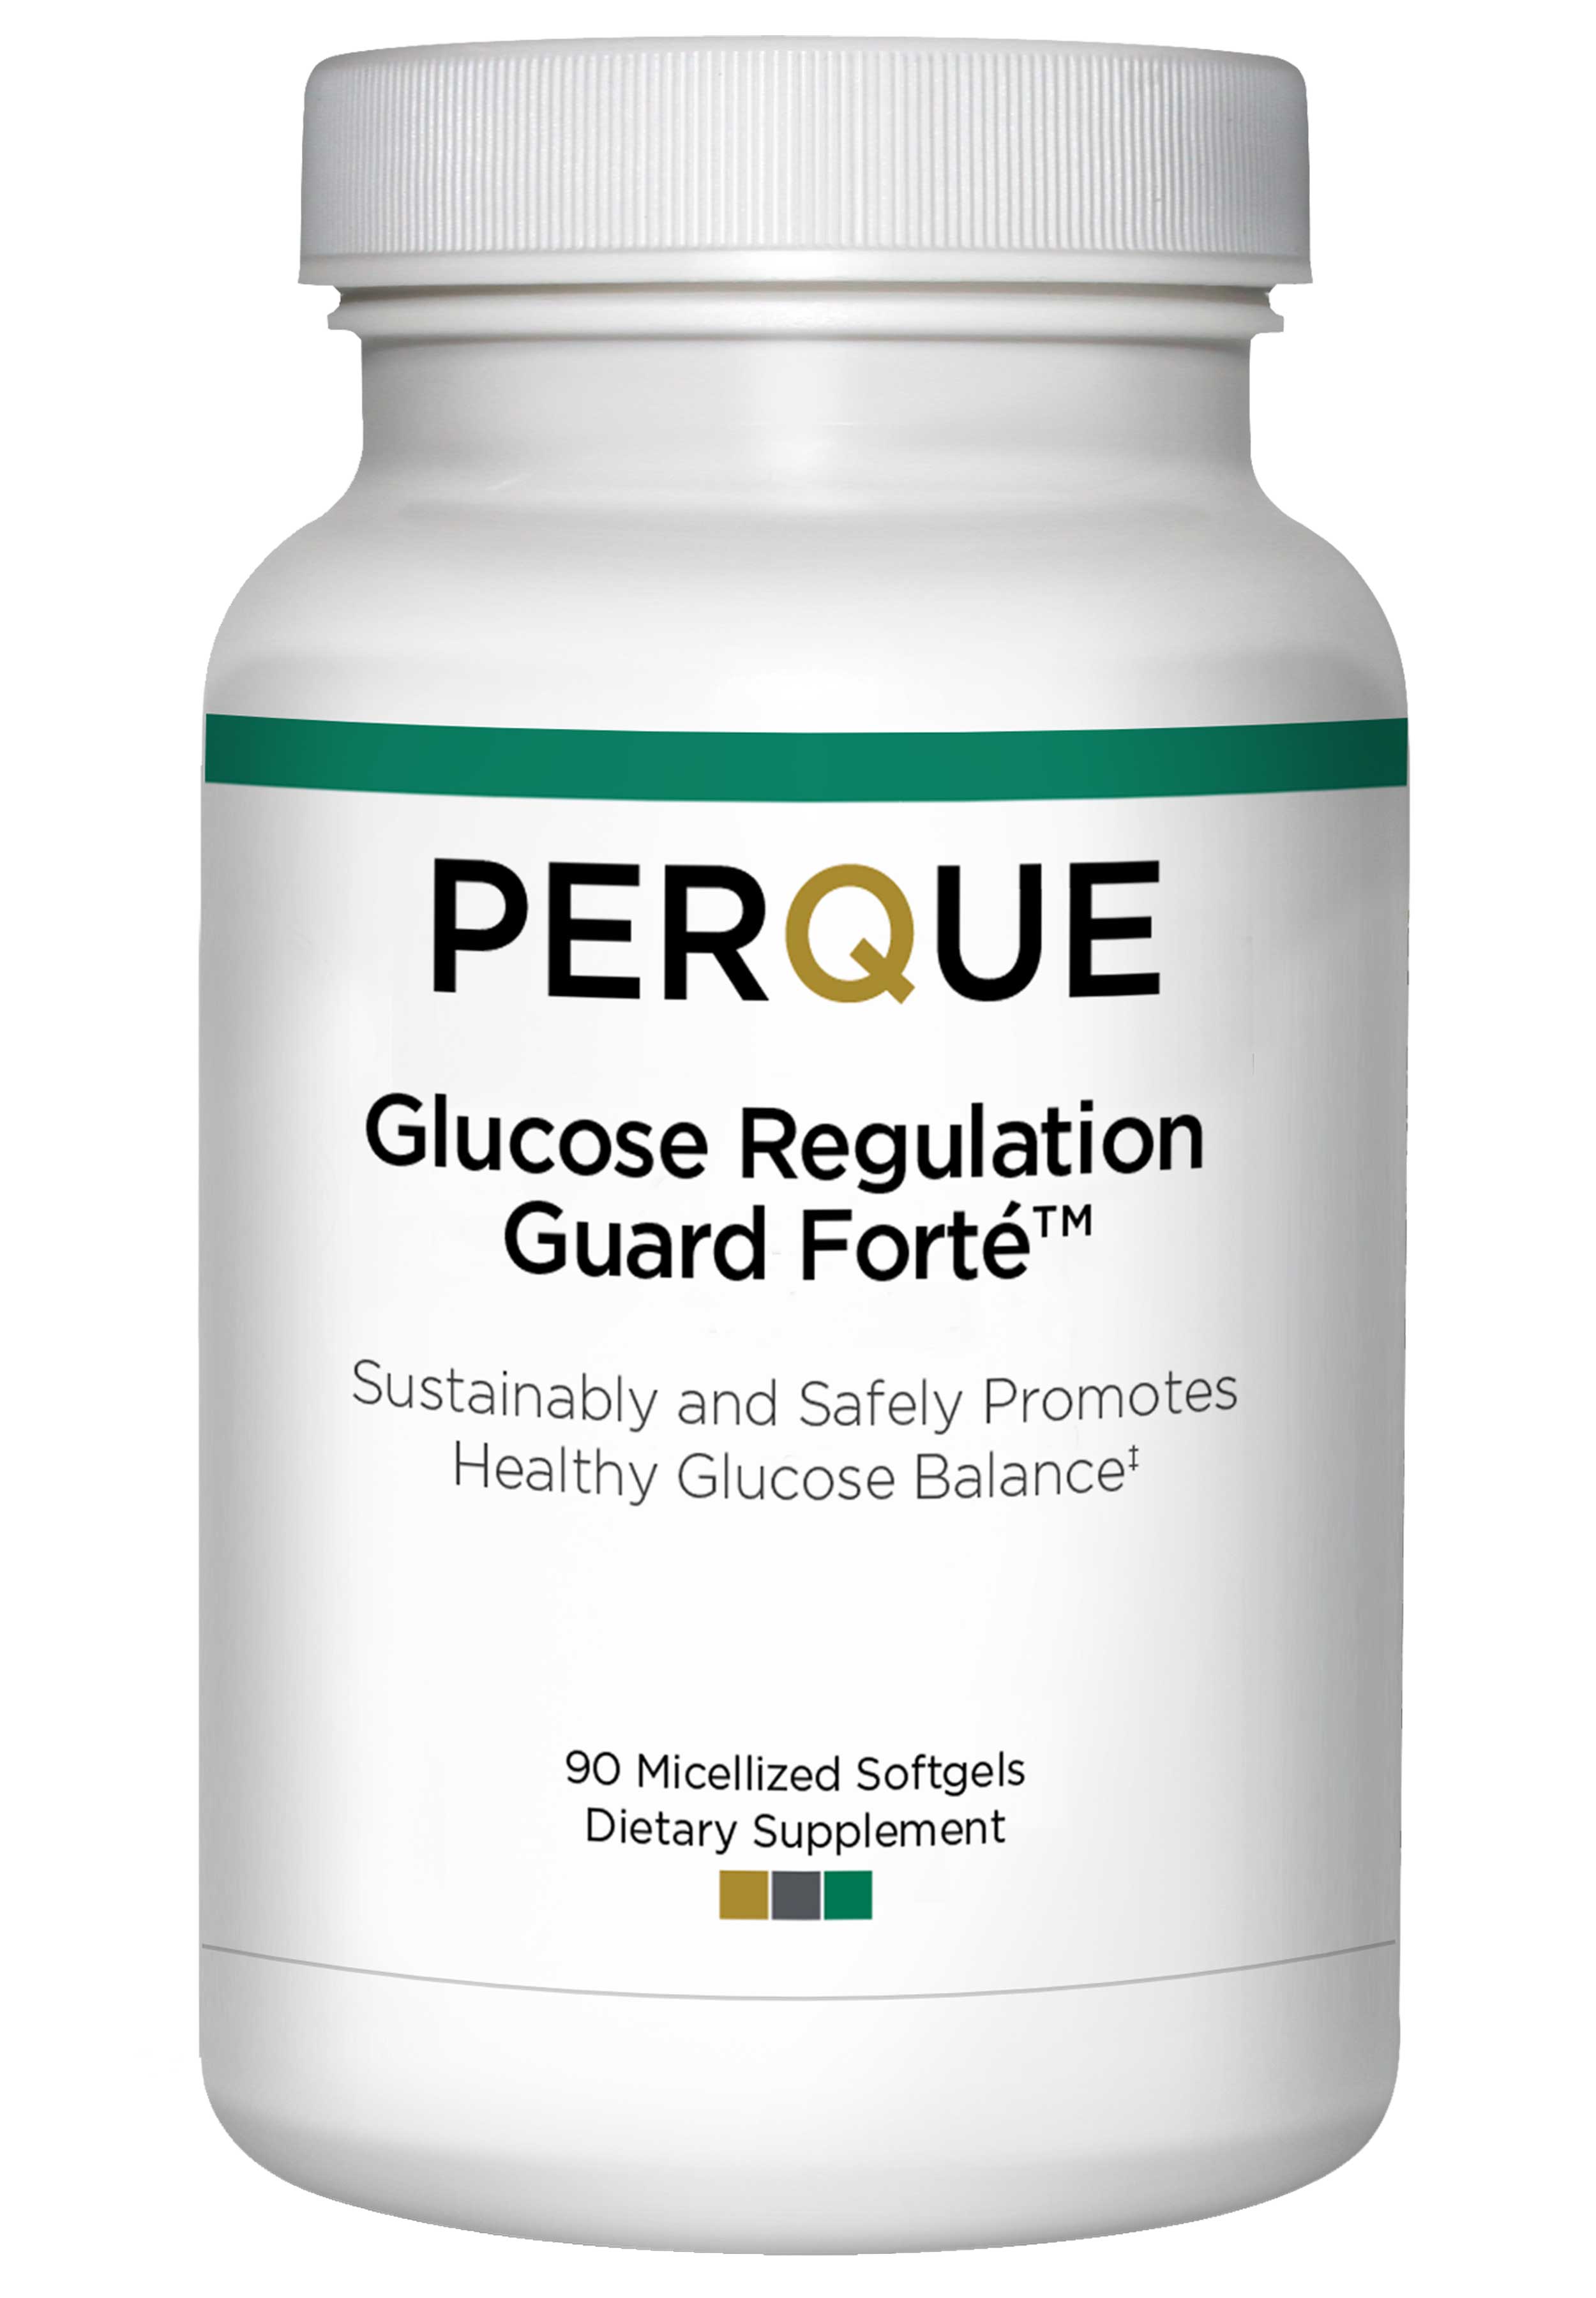 Perque Glucose Regulation Guard Forte